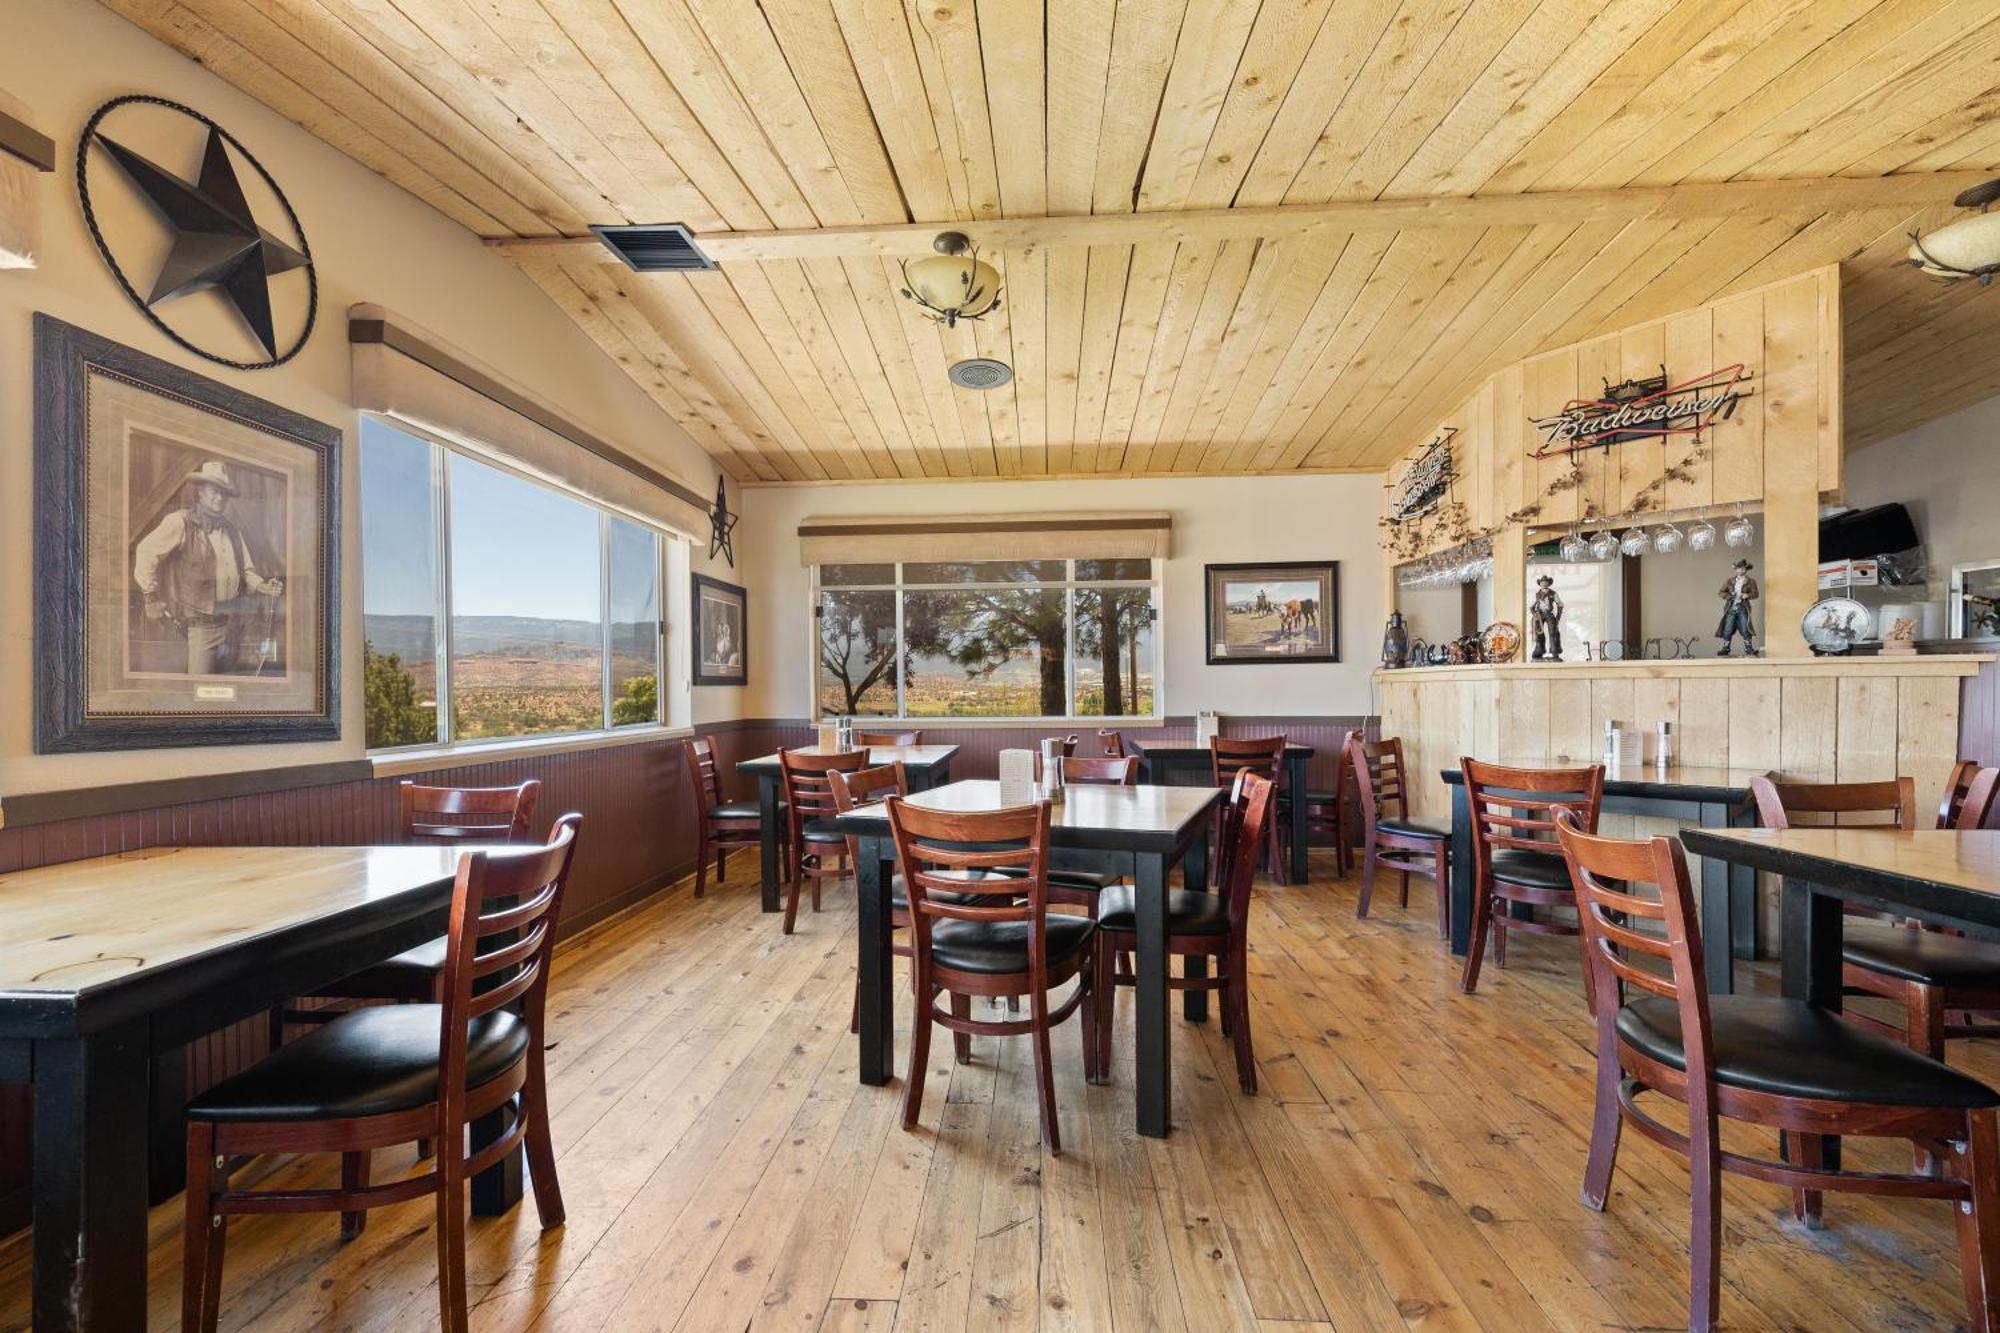 Broken Spur Inn & Steakhouse Torrey Zewnętrze zdjęcie